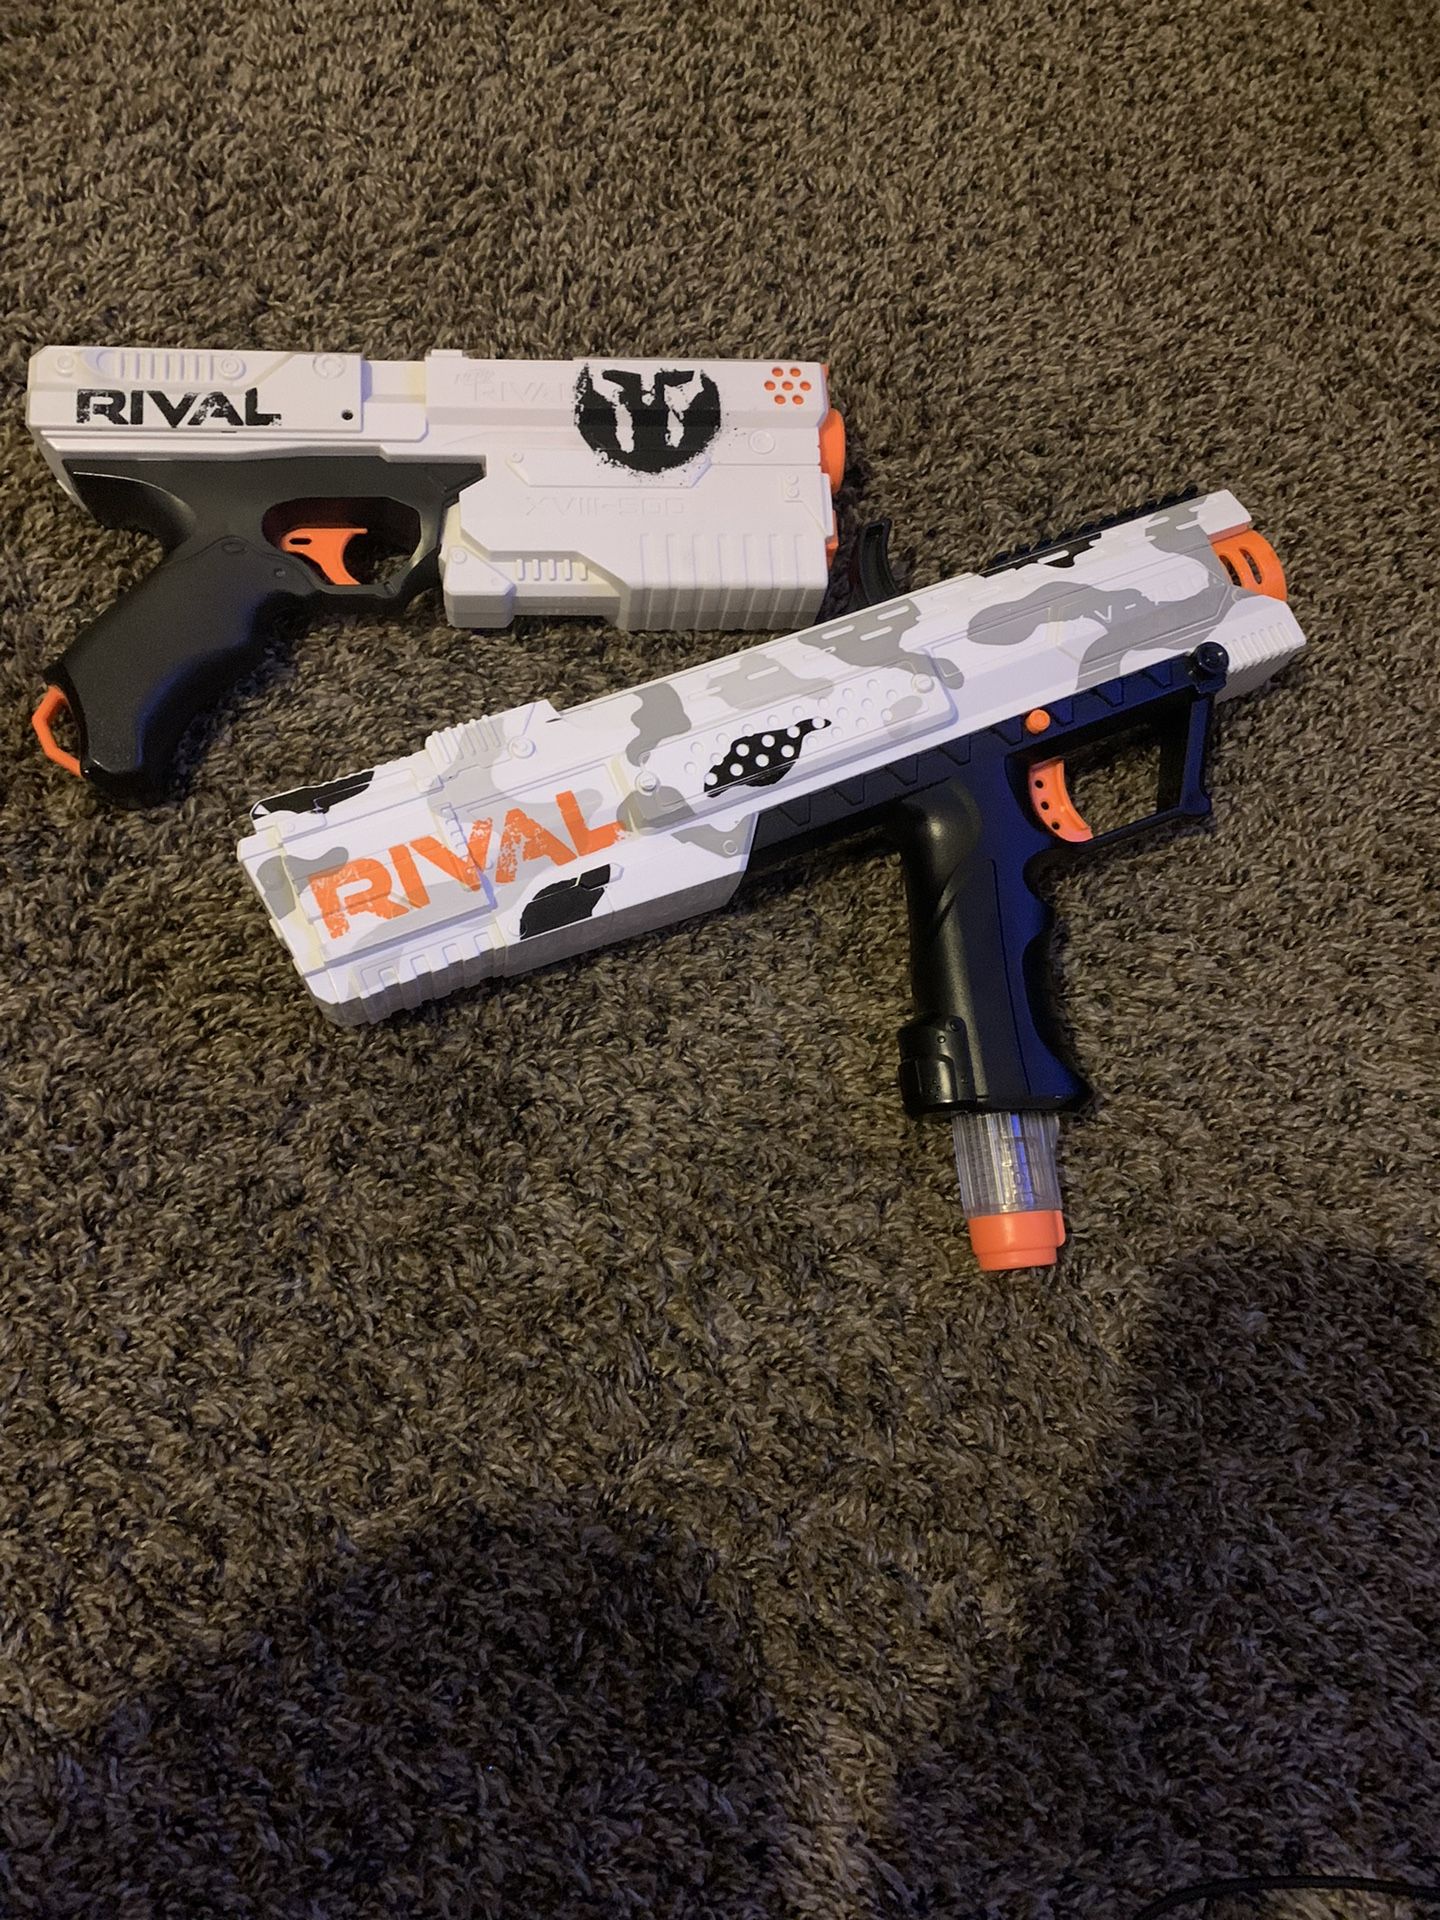 Rival Nerf Guns 